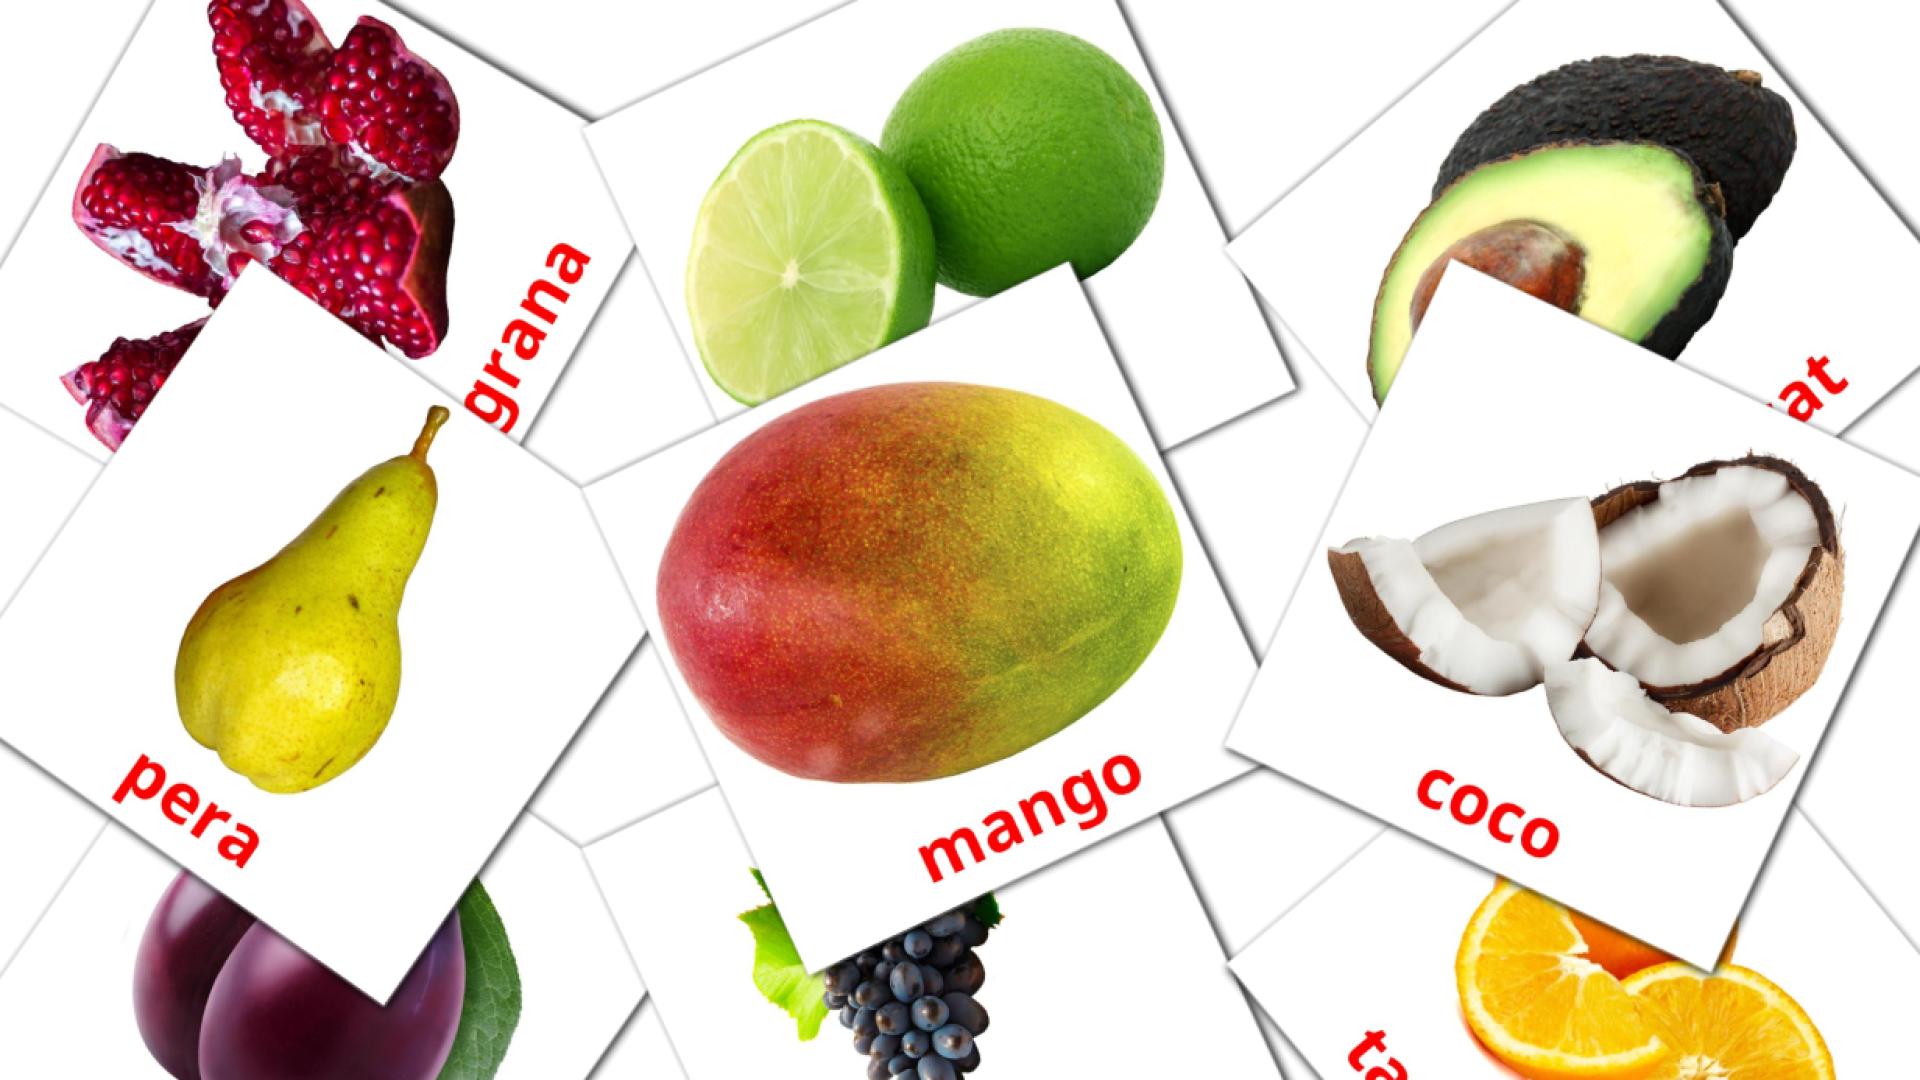 20 Fruites flashcards